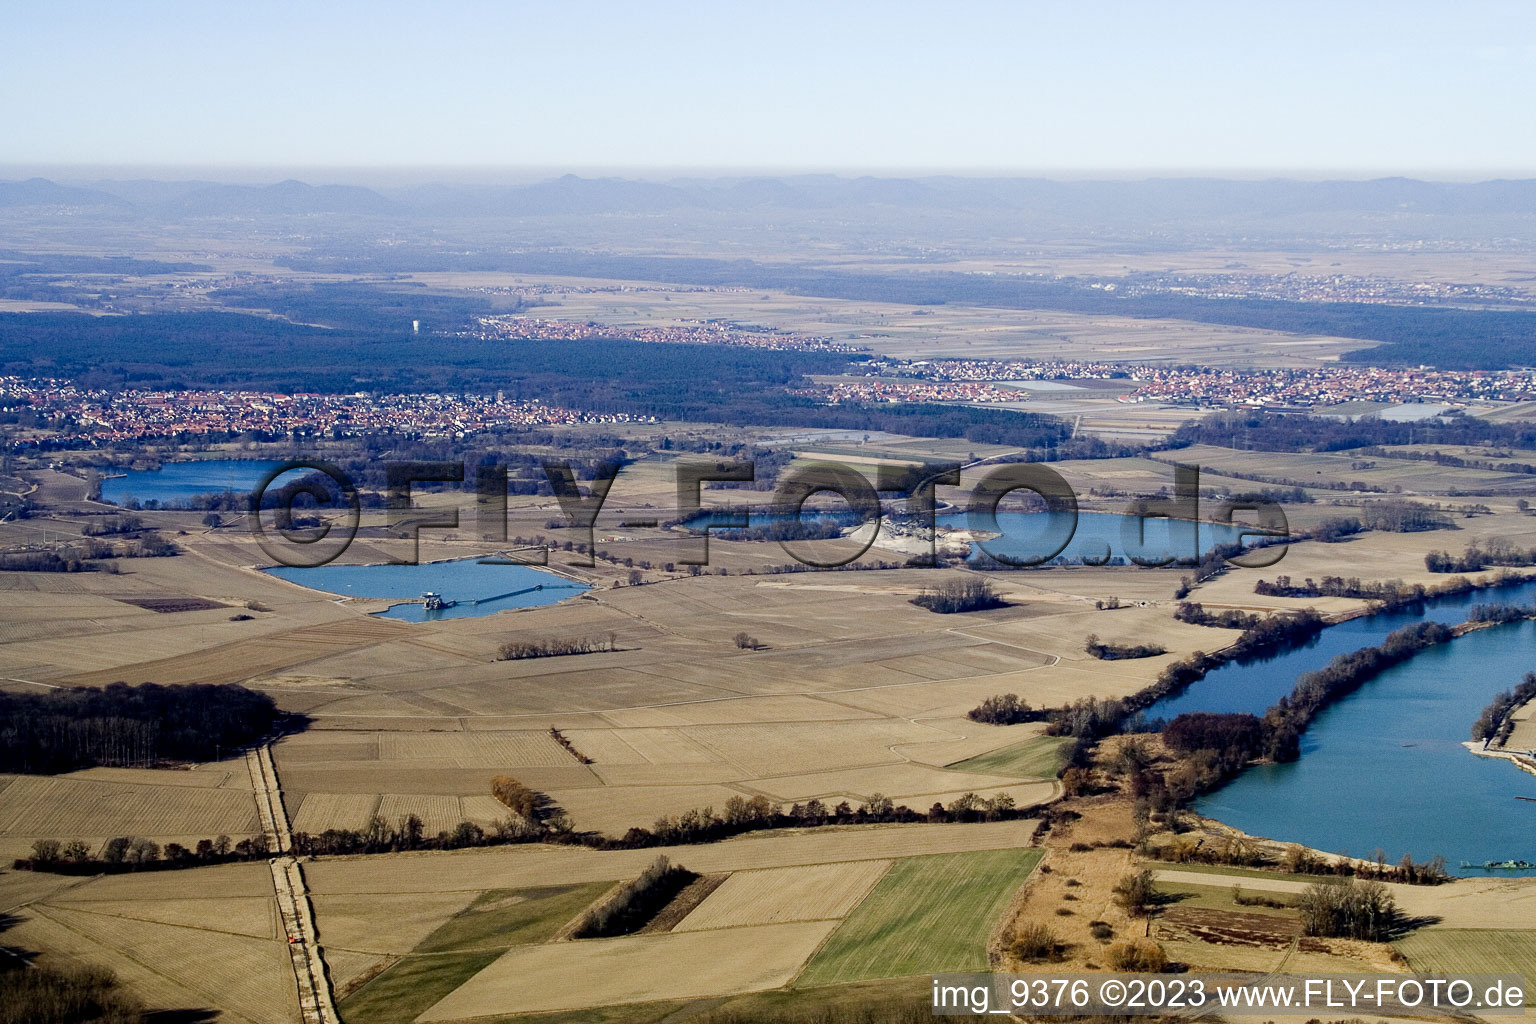 Quarry ponds between Neupotz and Jockgrim in Jockgrim in the state Rhineland-Palatinate, Germany